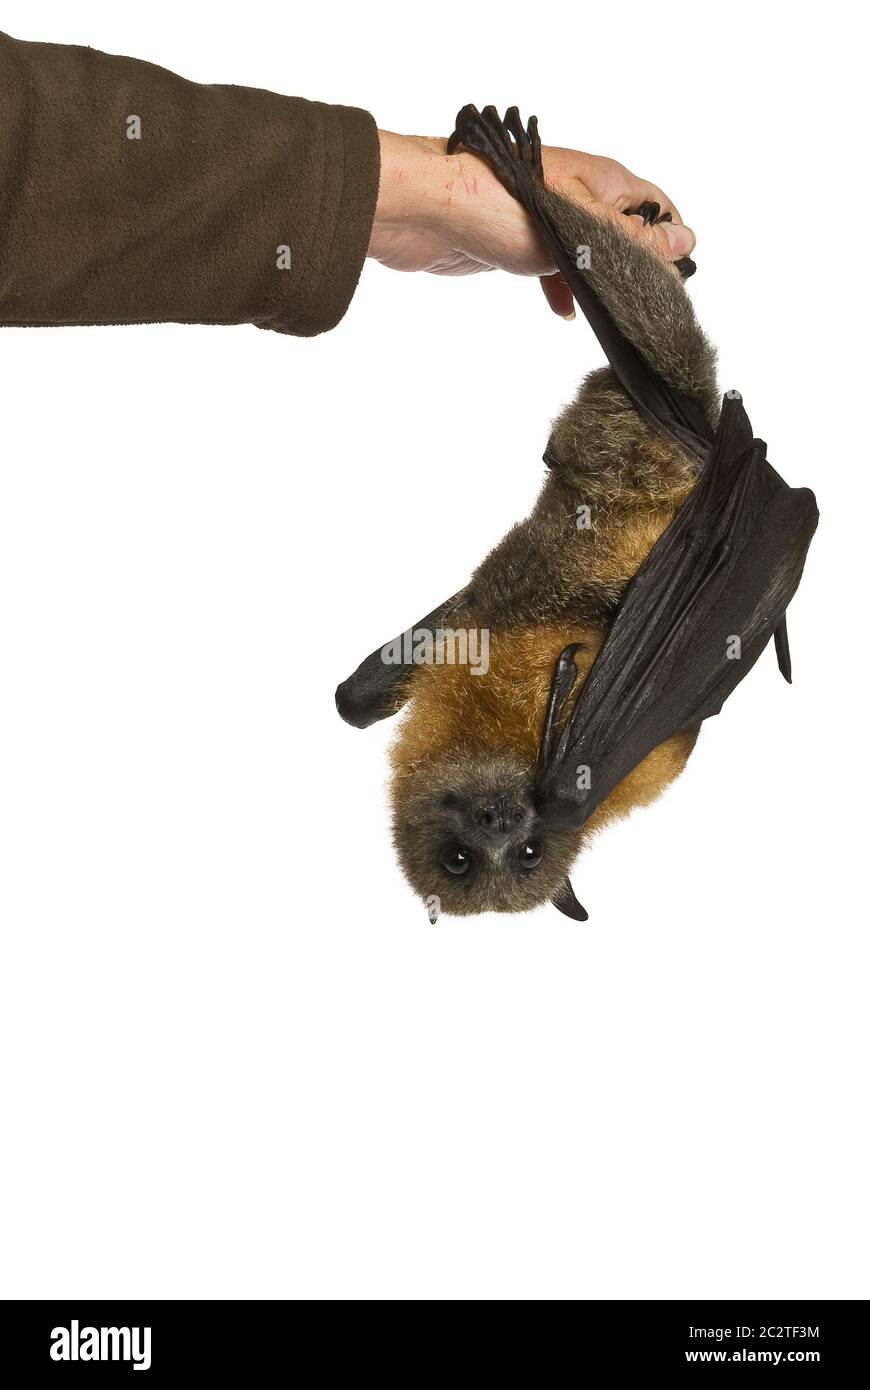 Fruit bat (flying fox) hanging upside down on white background. Stock Photo